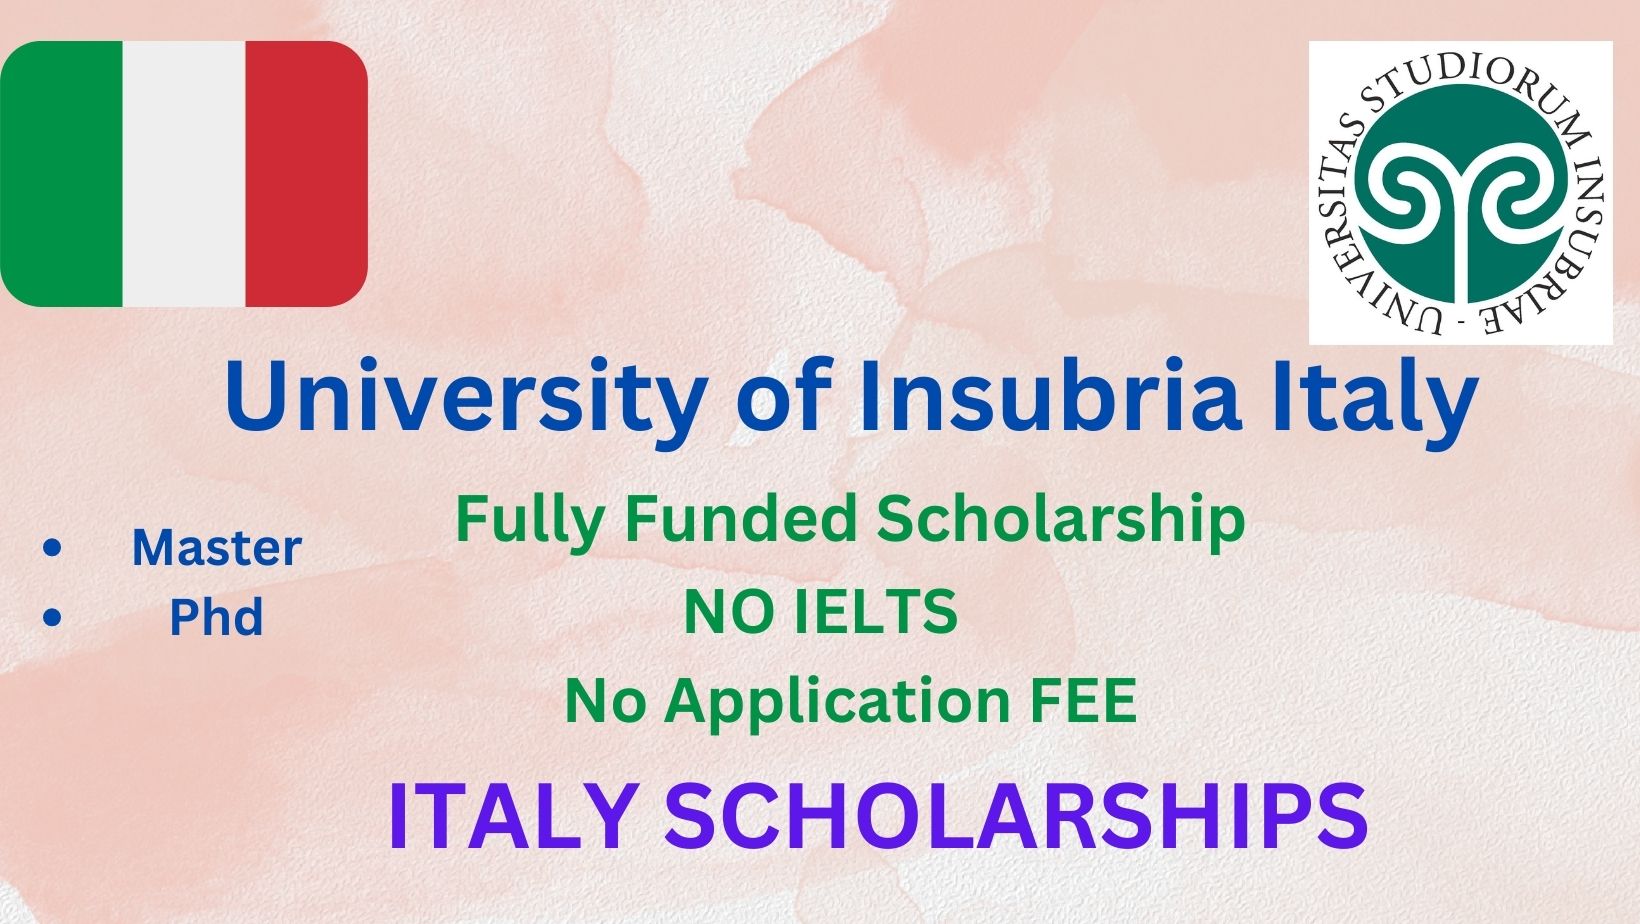 University of Insubria Italy